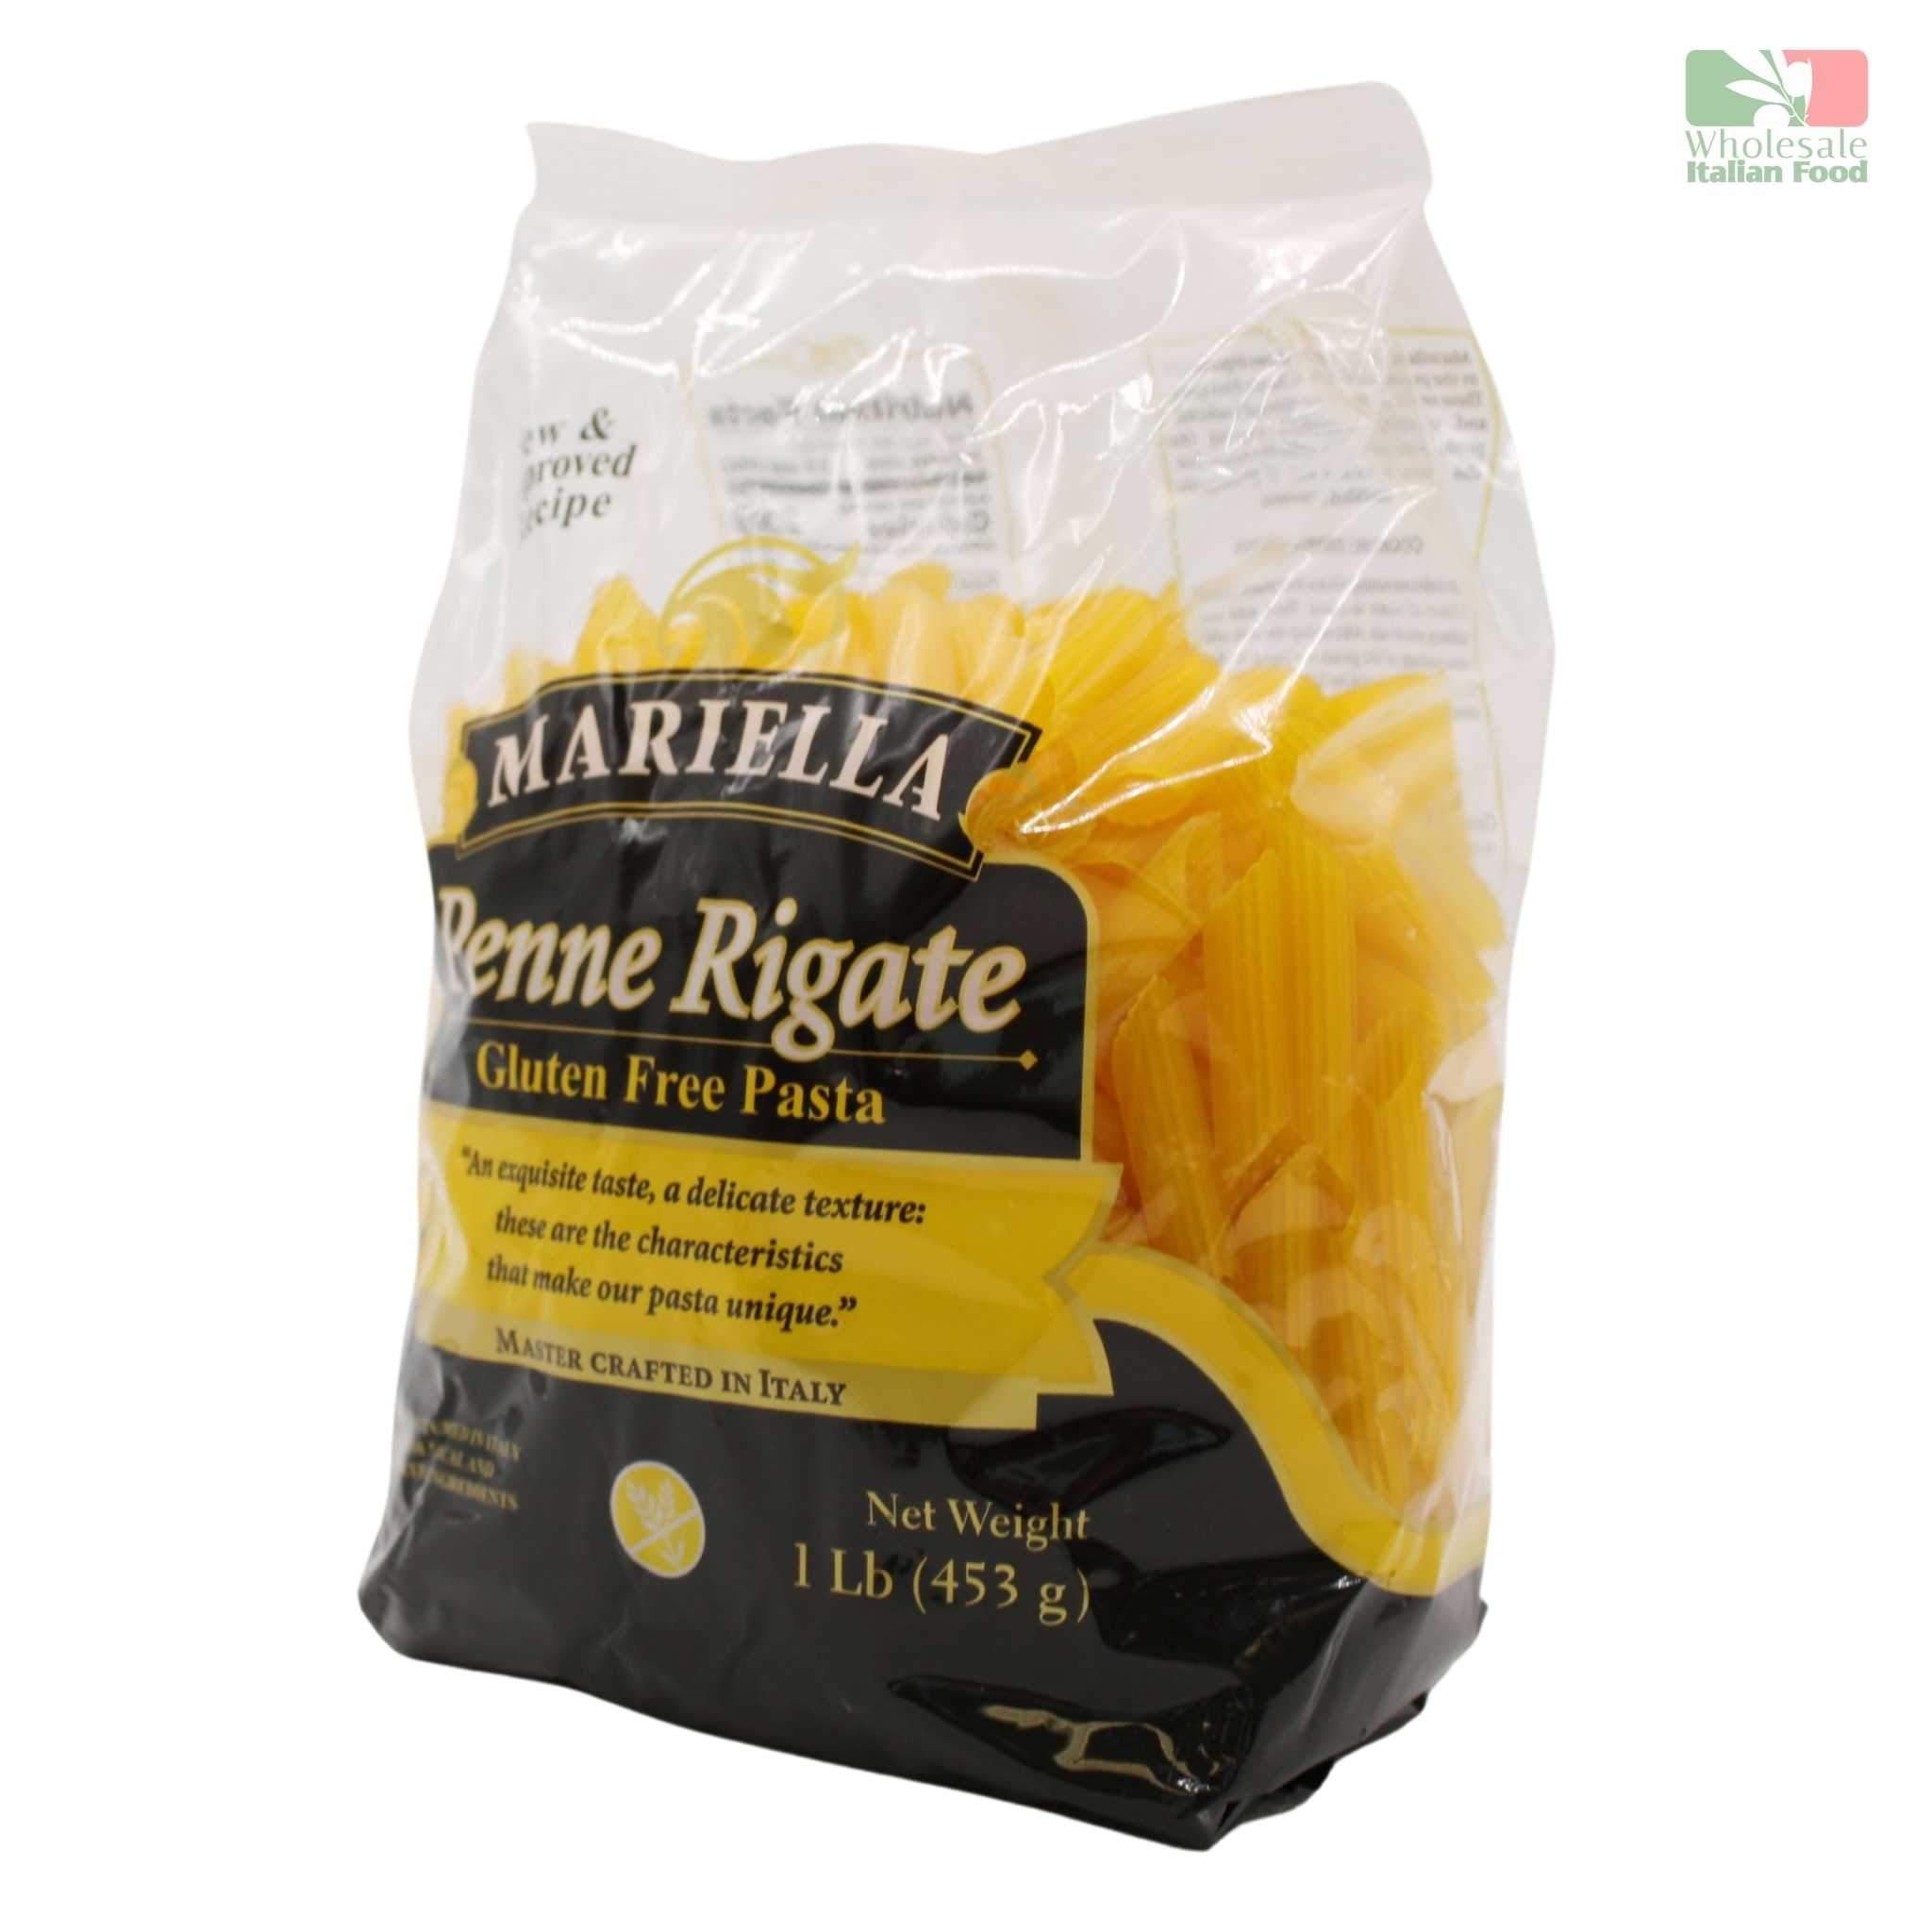 Mariella Gluten Free Penne Rigate Pasta - Wholesale Italian Food